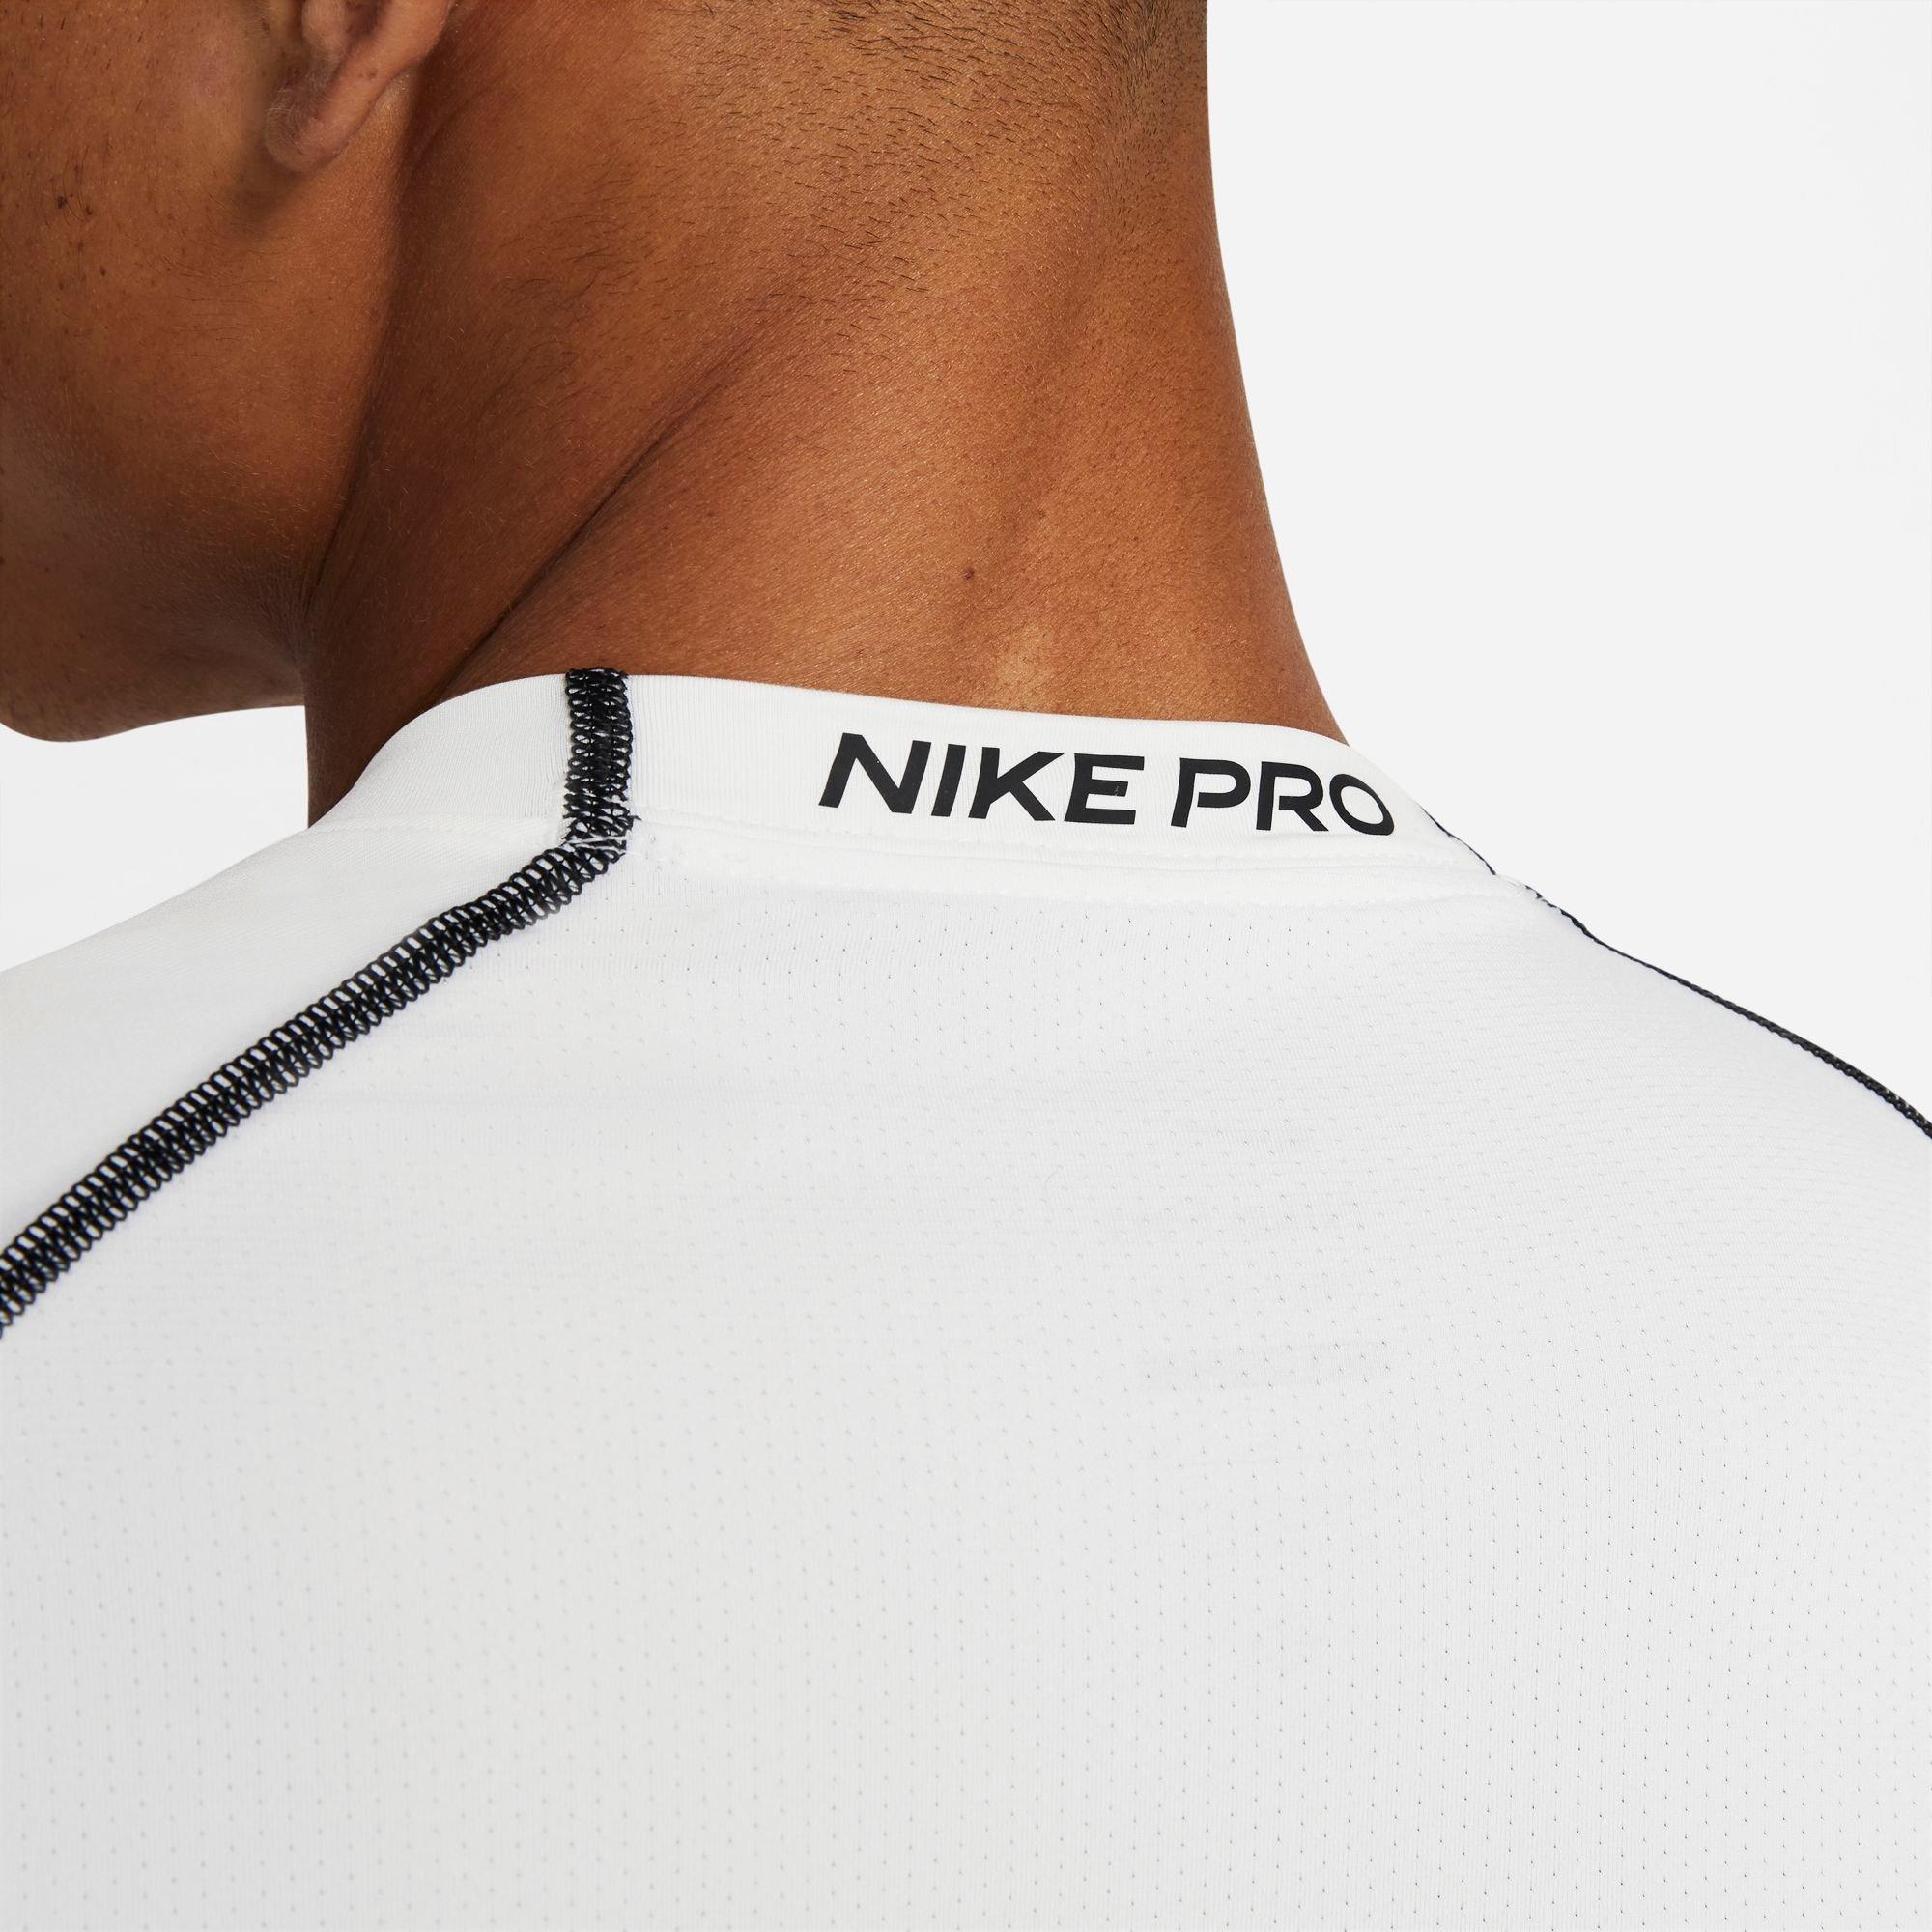 Nike Pro Dri-FIT Men's Slim Fit Long-Sleeve Top.